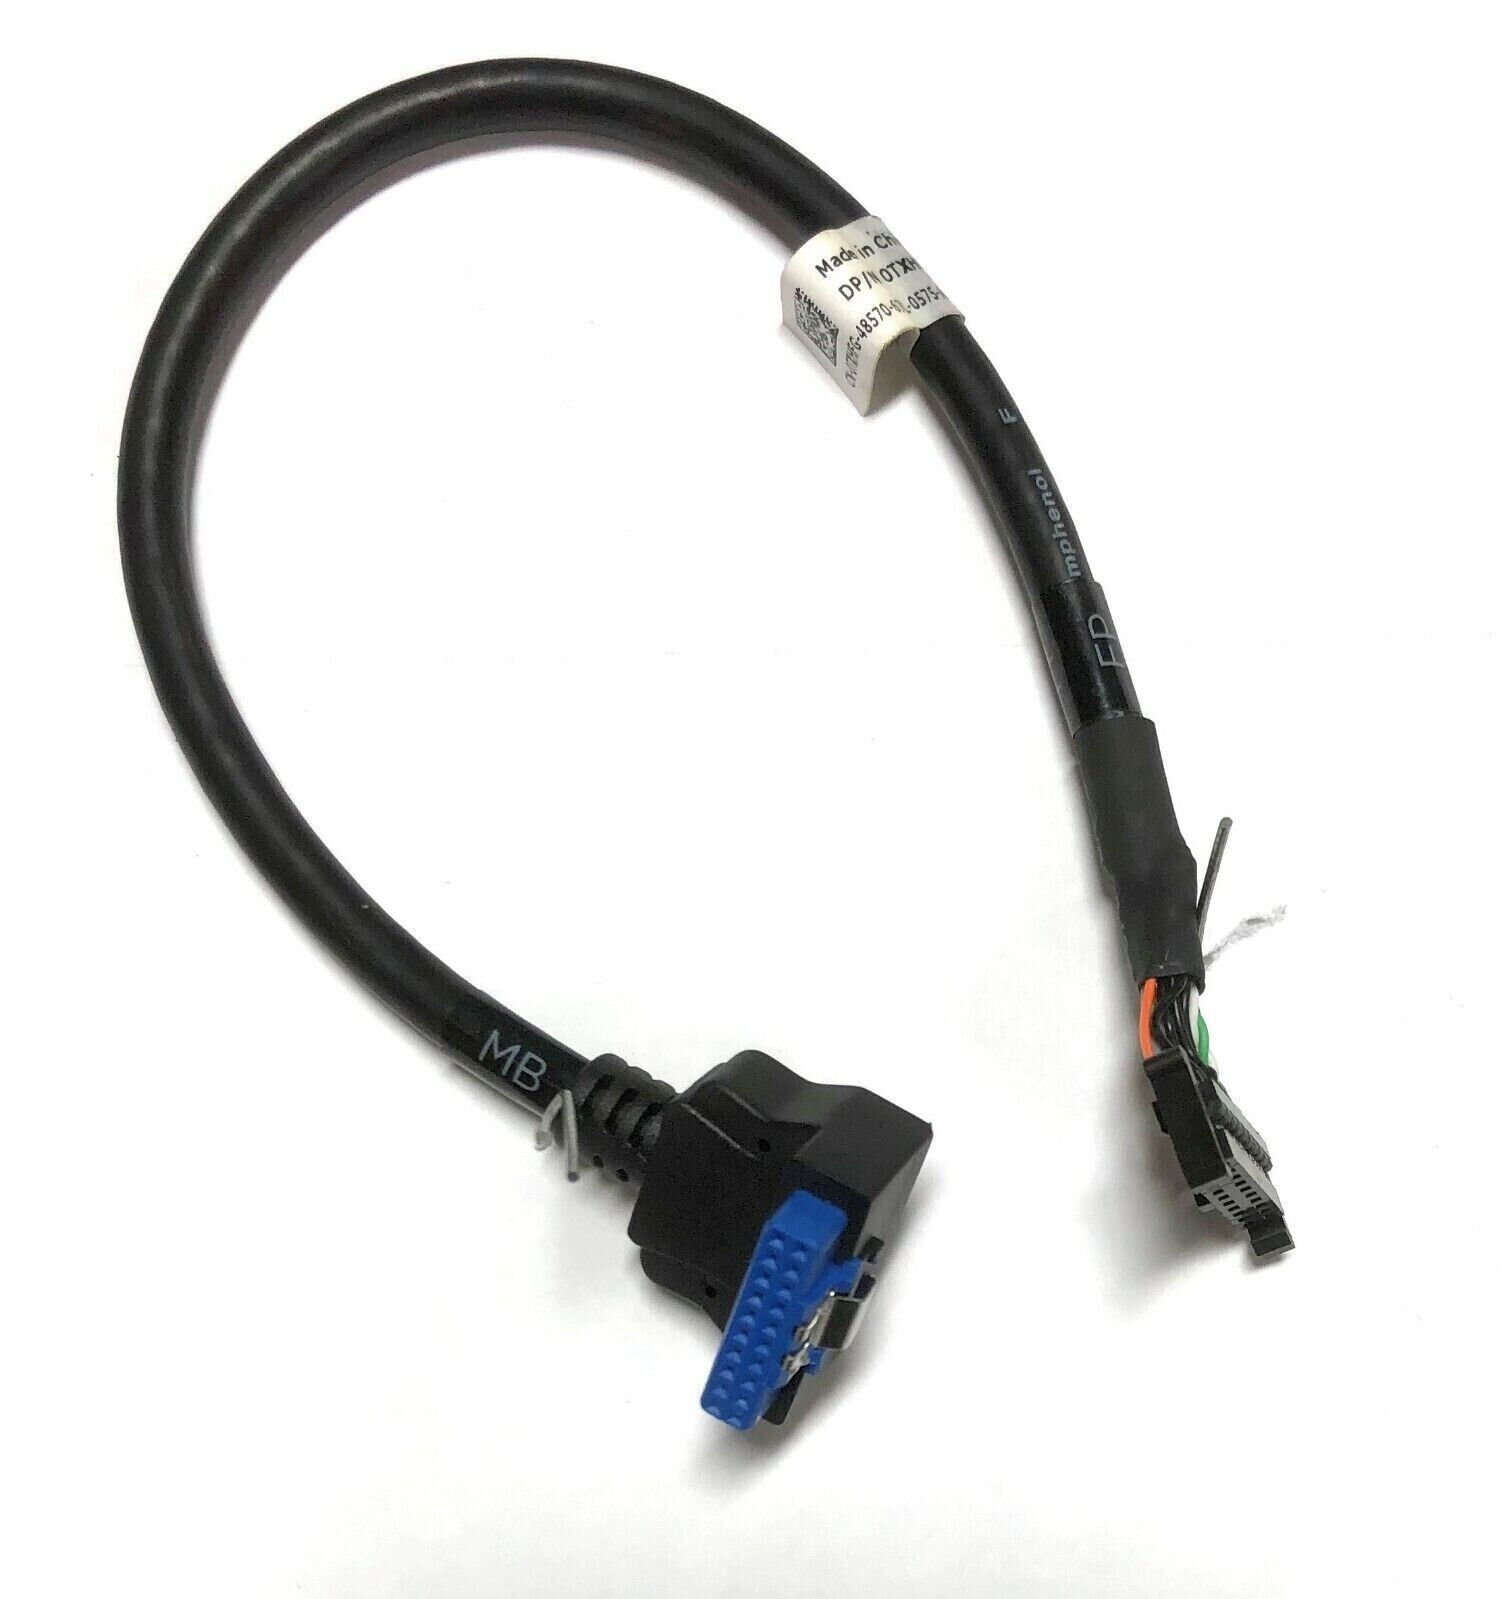 NEW OEM DELL POWEREDGE T630 CONTROL PANEL USB CABLE P/N TXHFG 0TXHFG